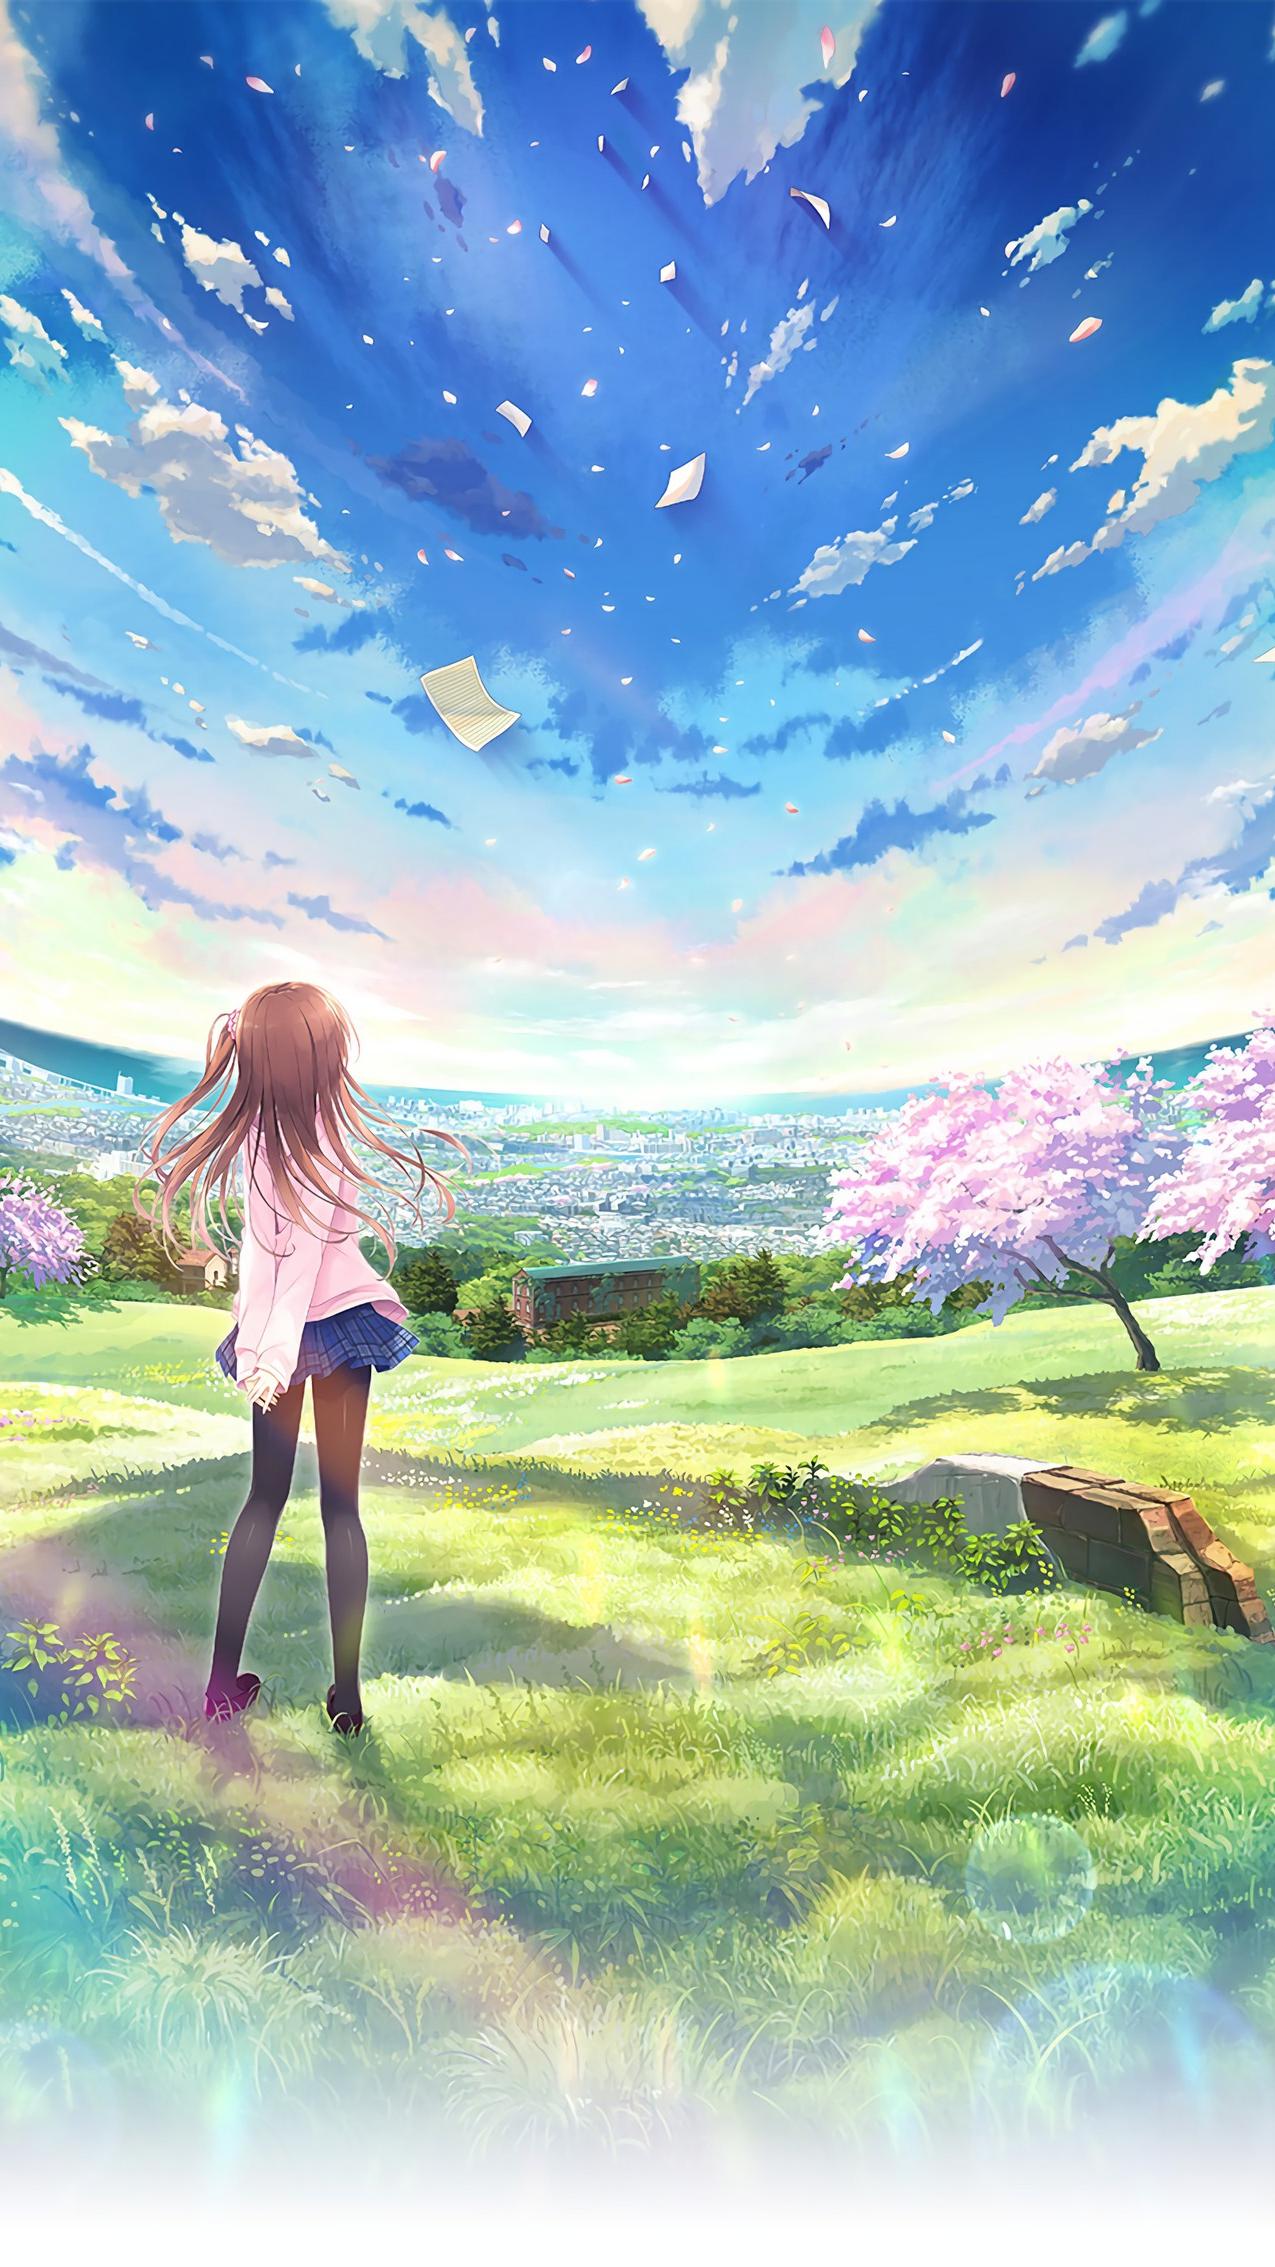 1275 x 2267 · jpeg - Anime-World-Beautiful-Girl-Sky-iPhone-Wallpaper - iPhone Wallpapers